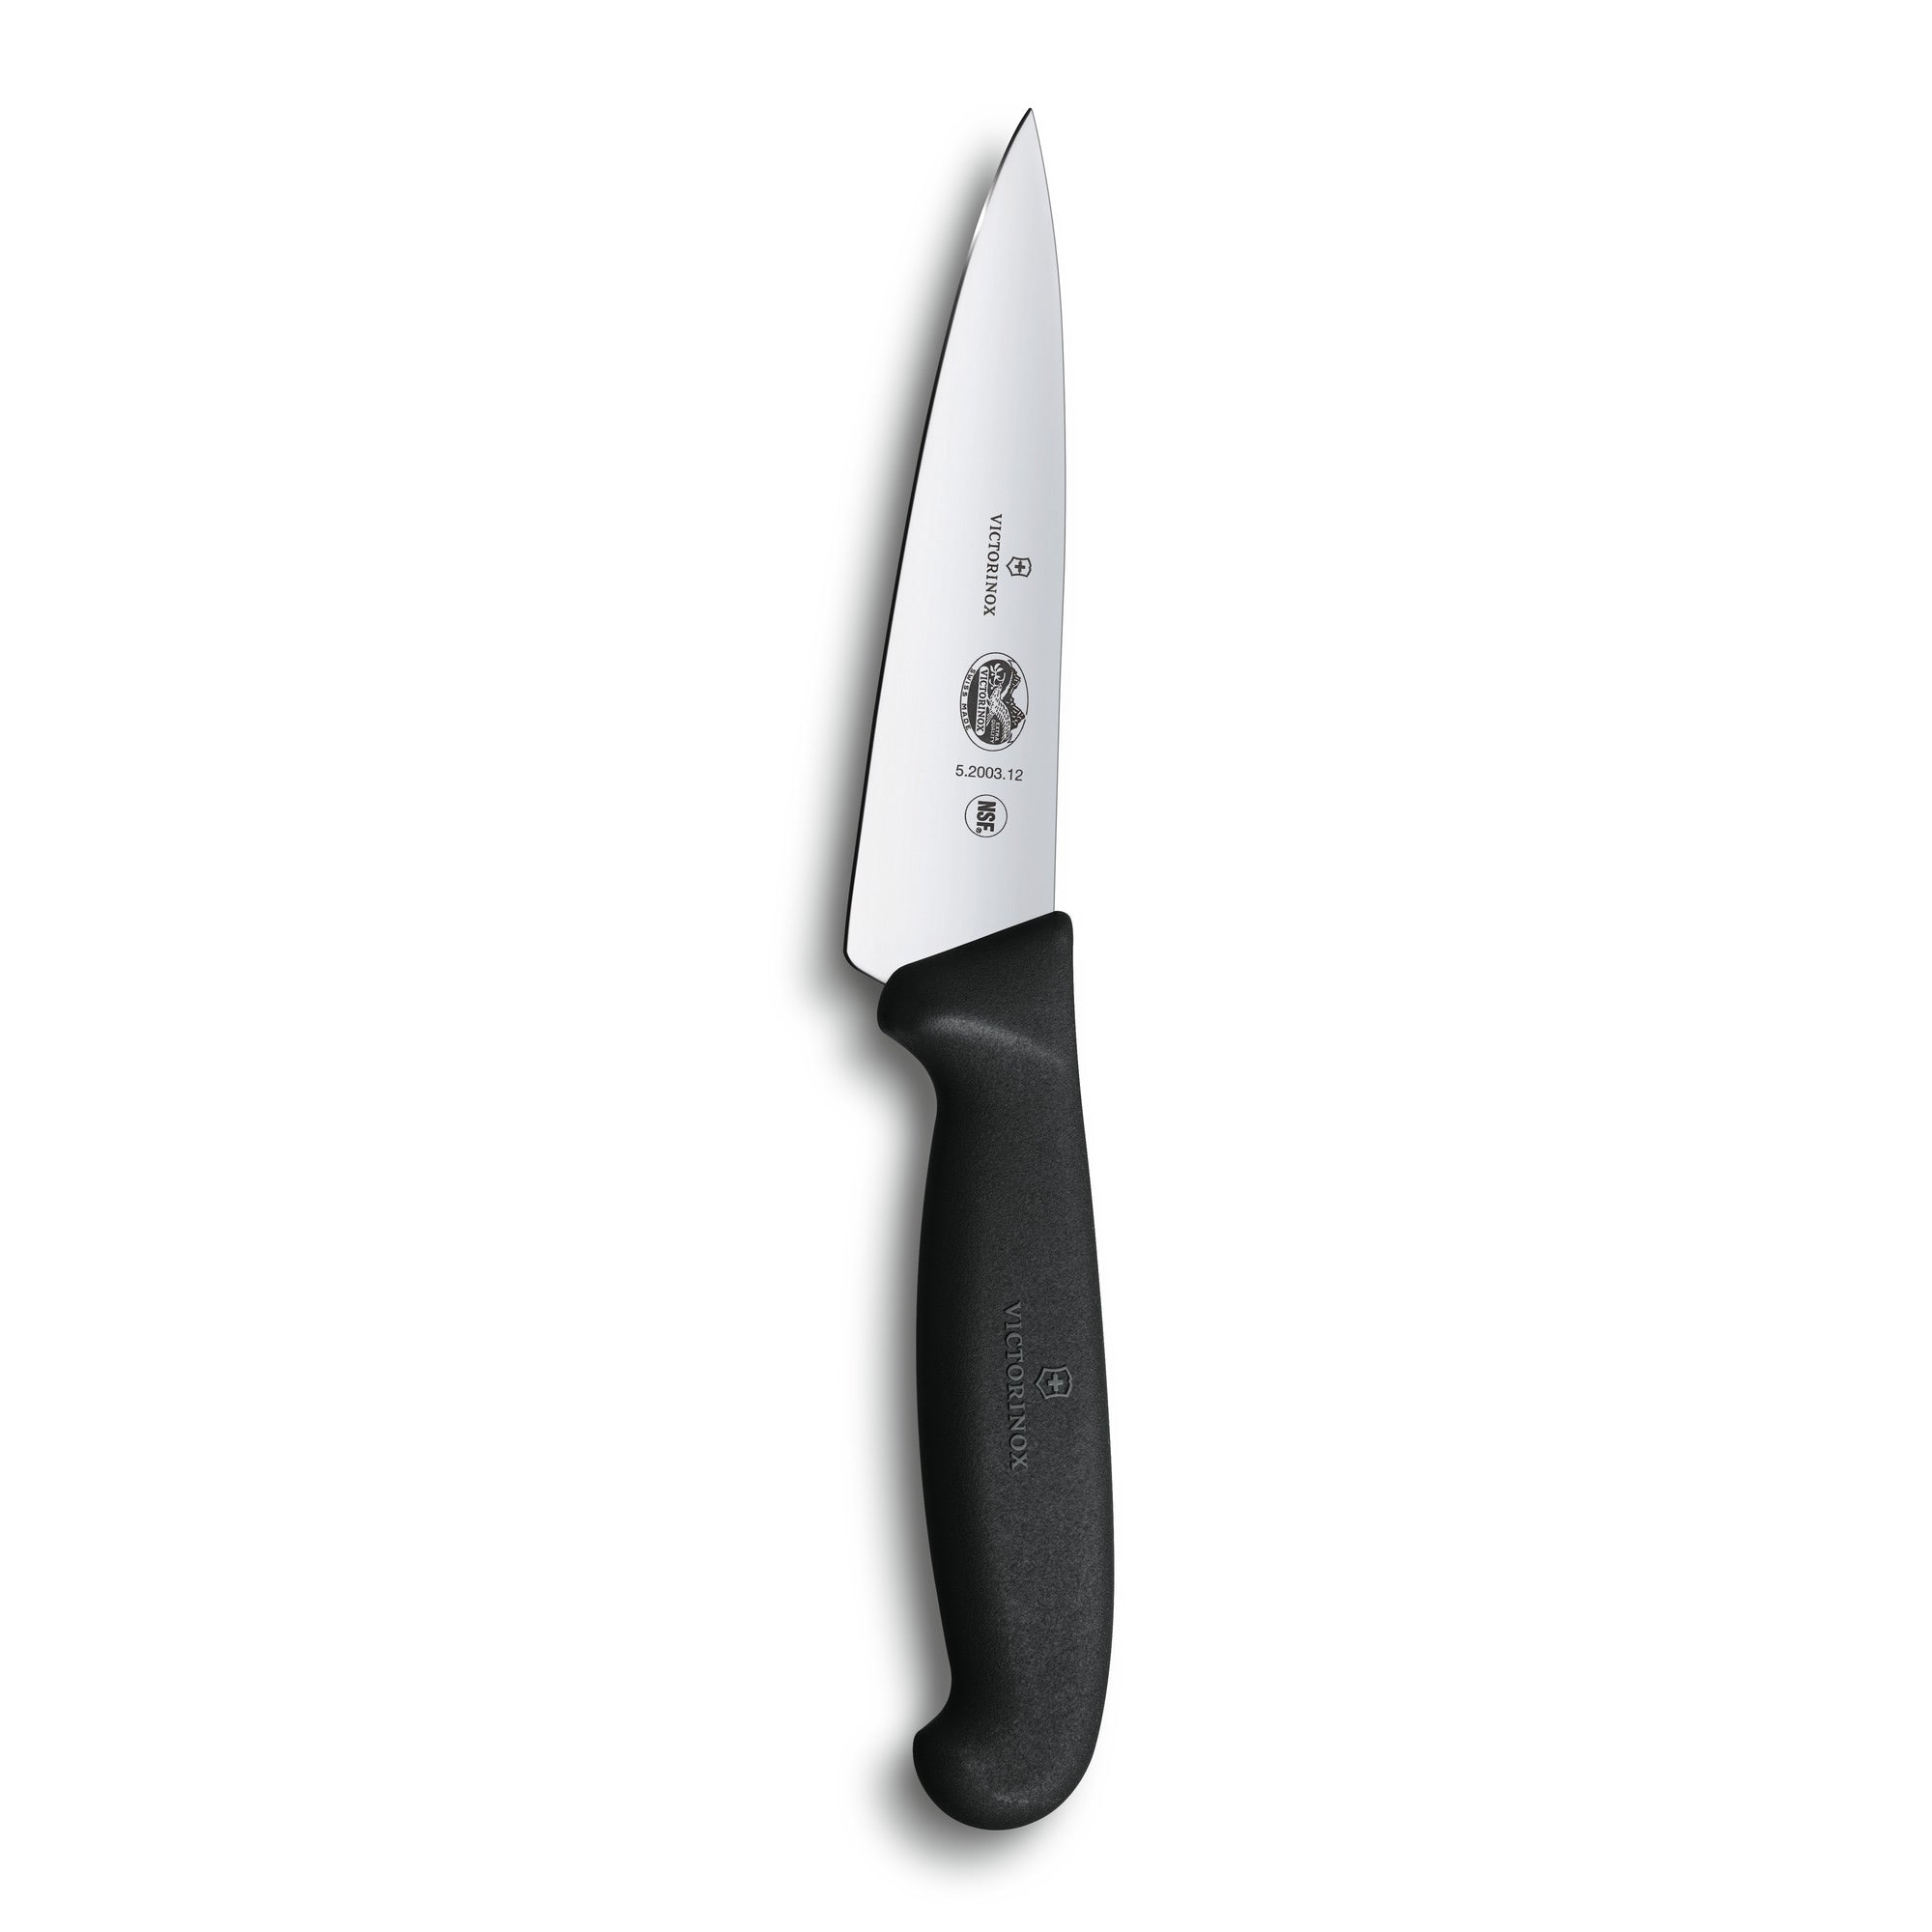 Victorinox Swiss Army Fibrox 6 Chef's Knife with Black Handle